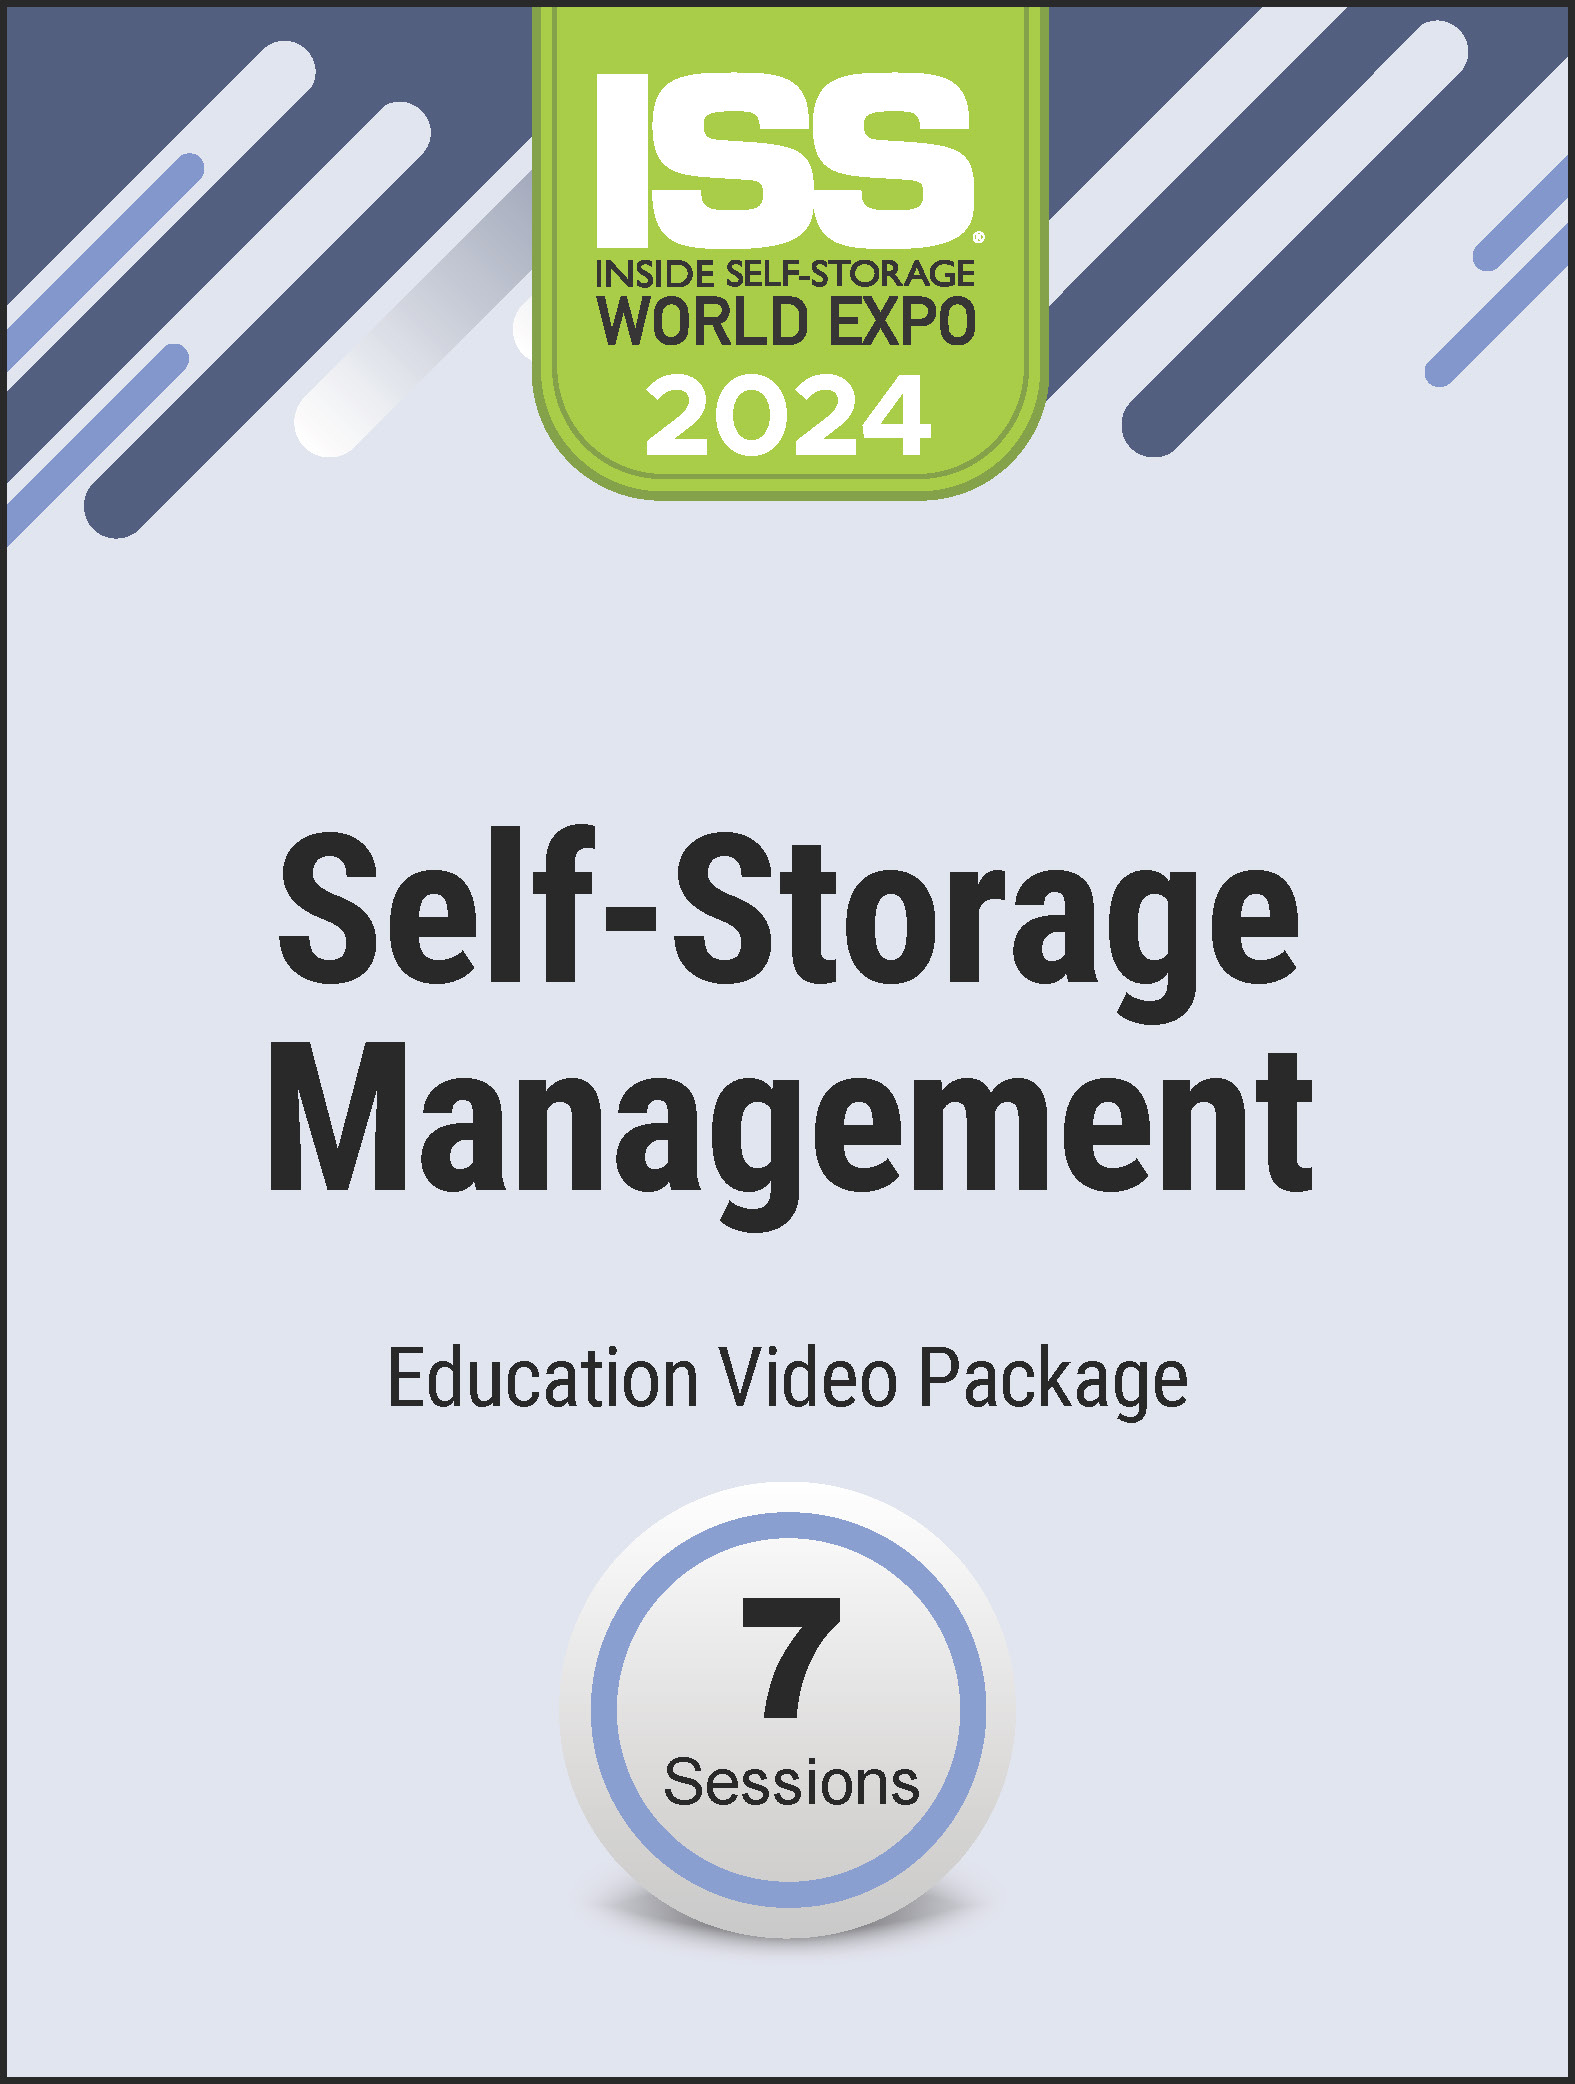 Video Pre-Order PDF - Self-Storage Management 2024 Education Video Package